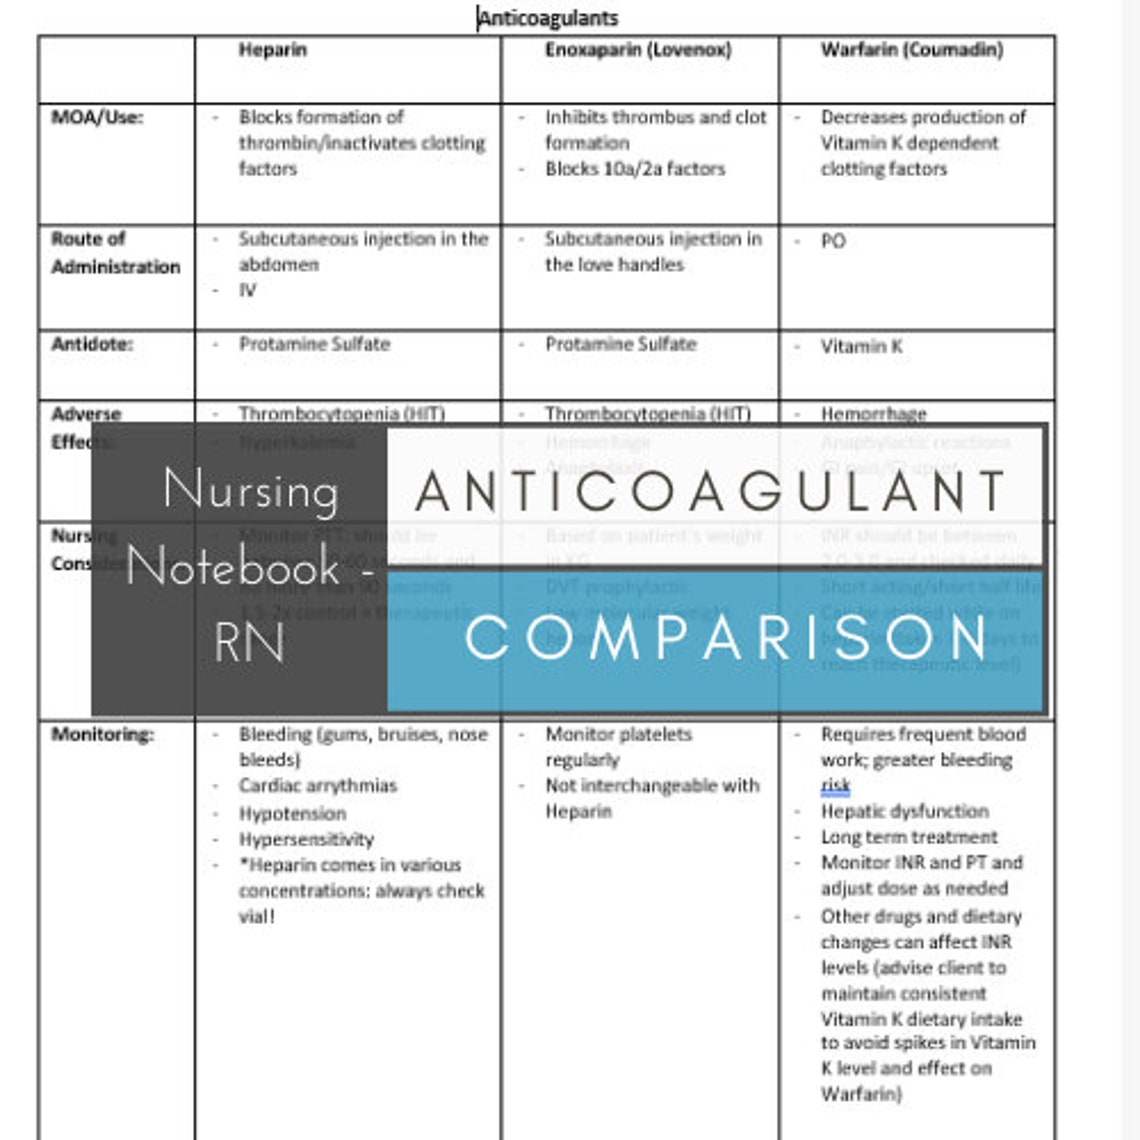 anticoagulant-comparison-table-nursing-study-guide-etsy